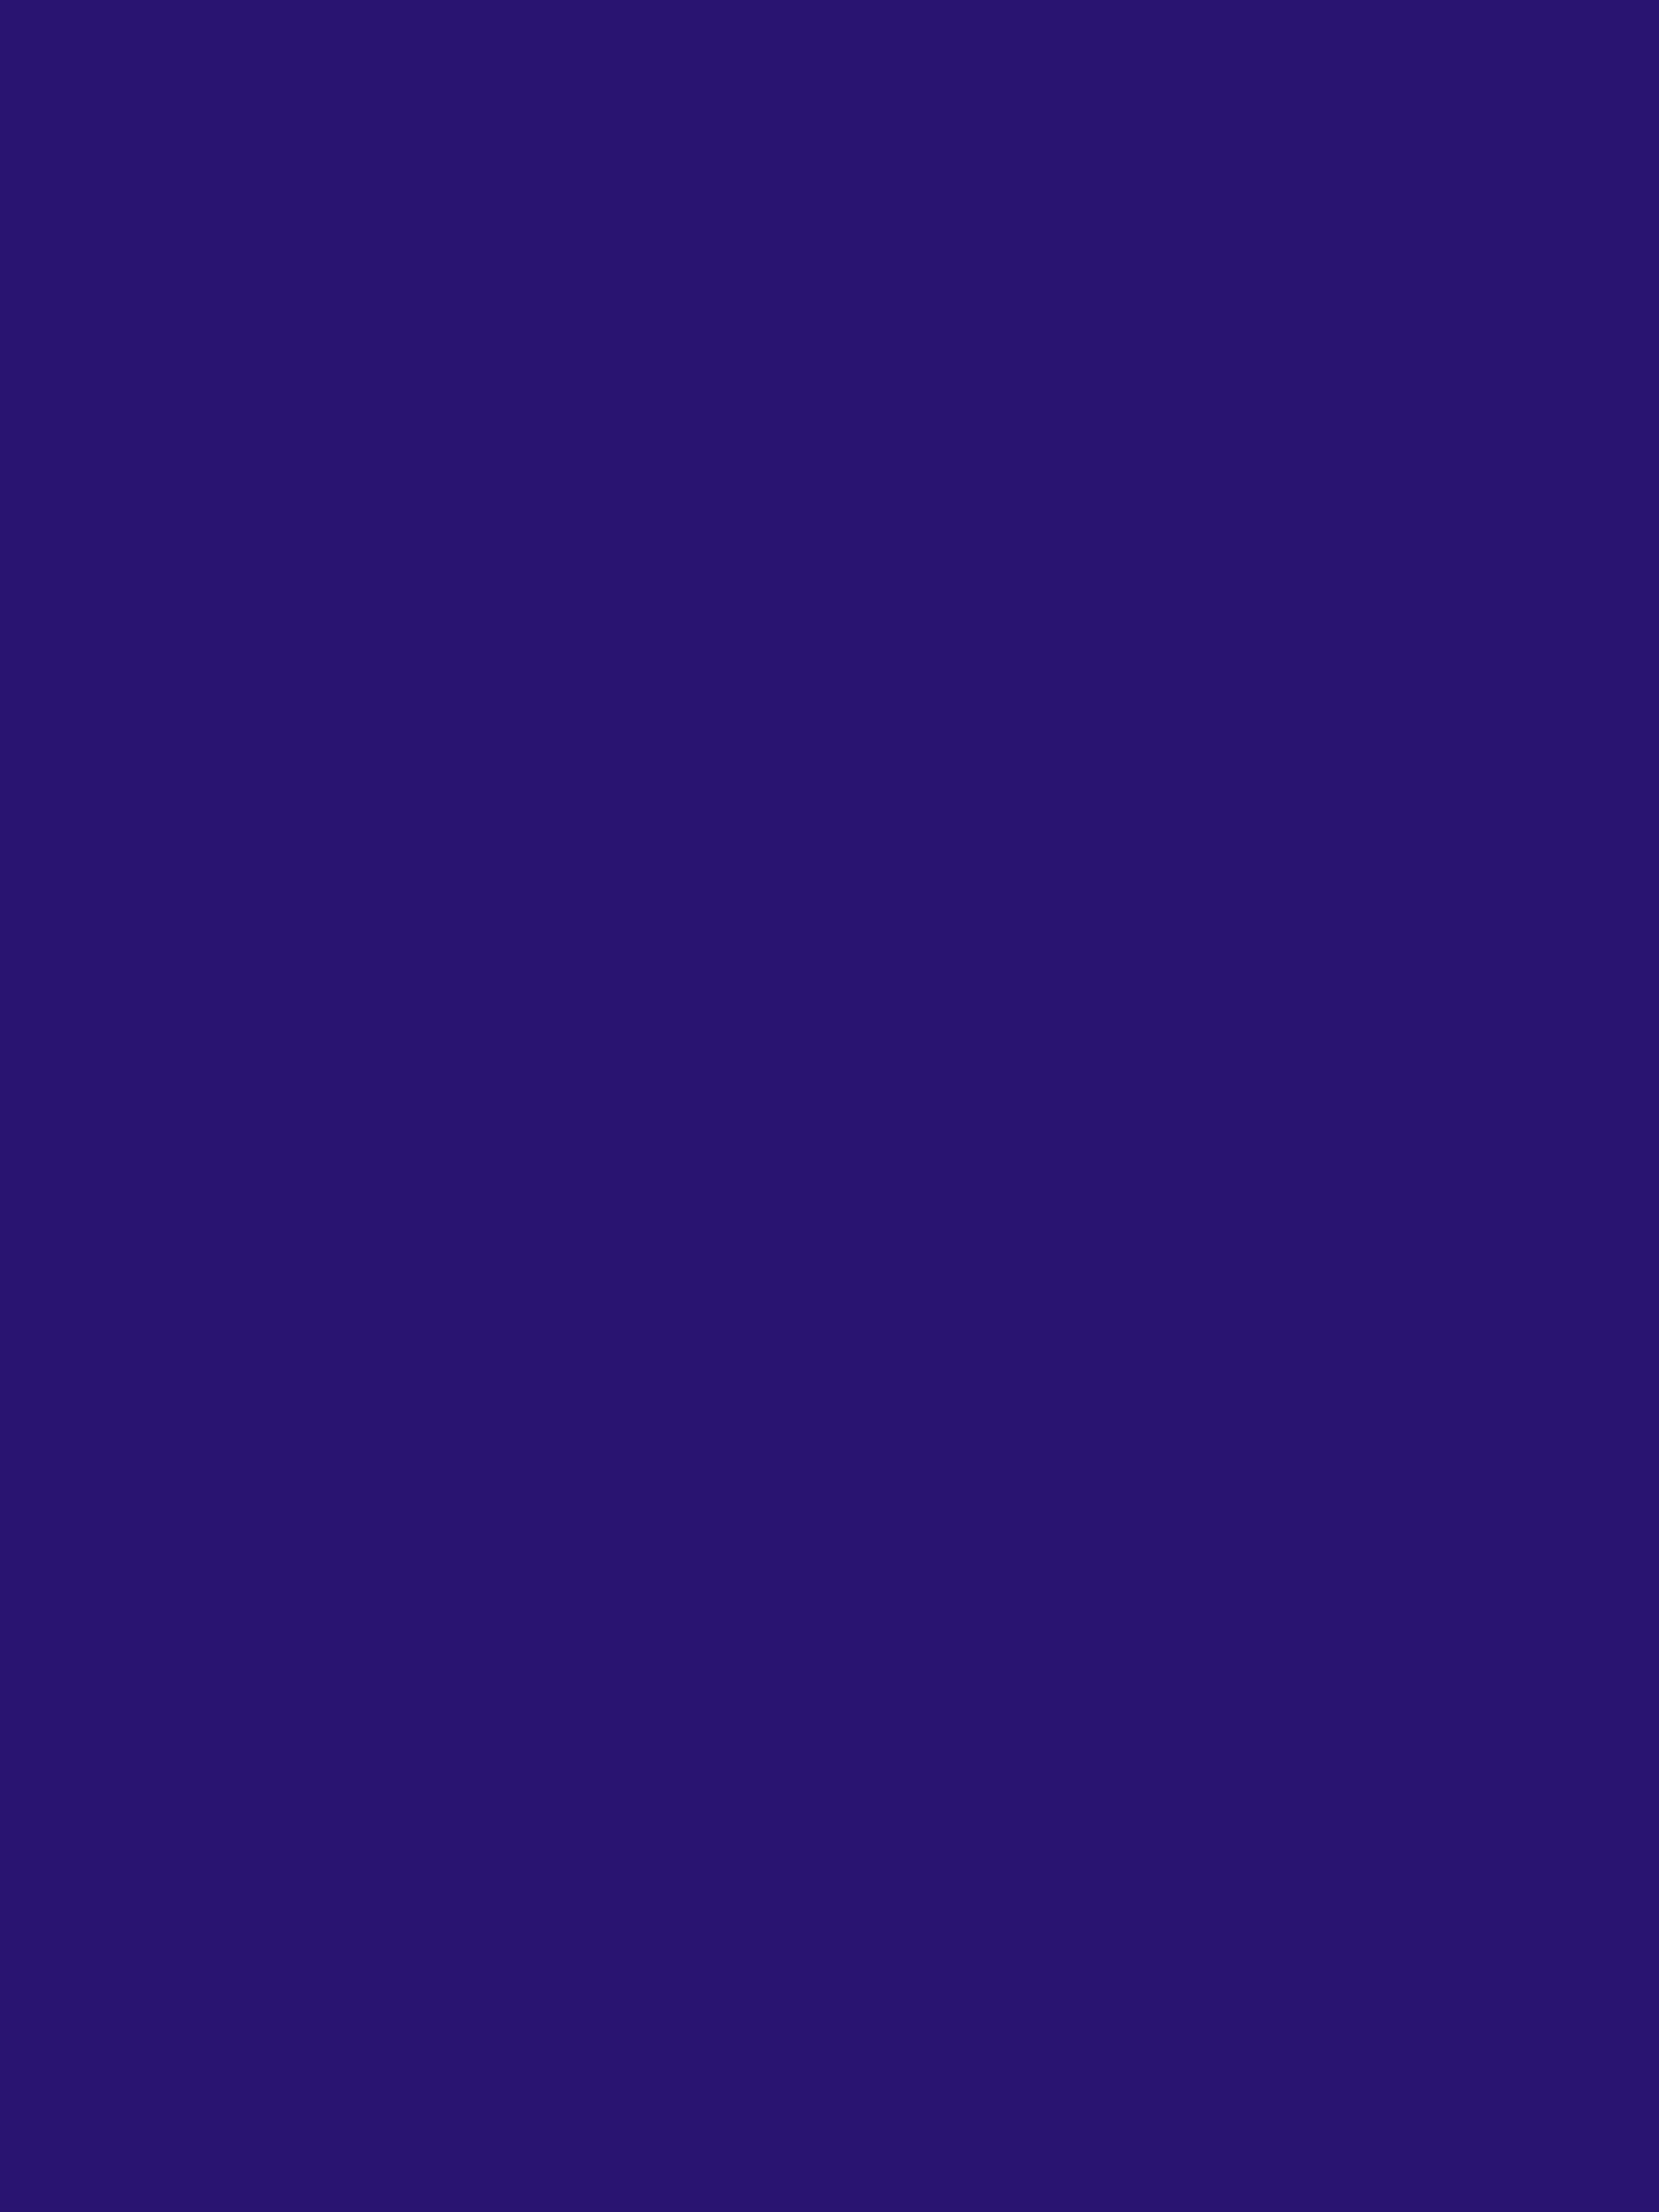 Bluish-purple Vertical  Rectangle